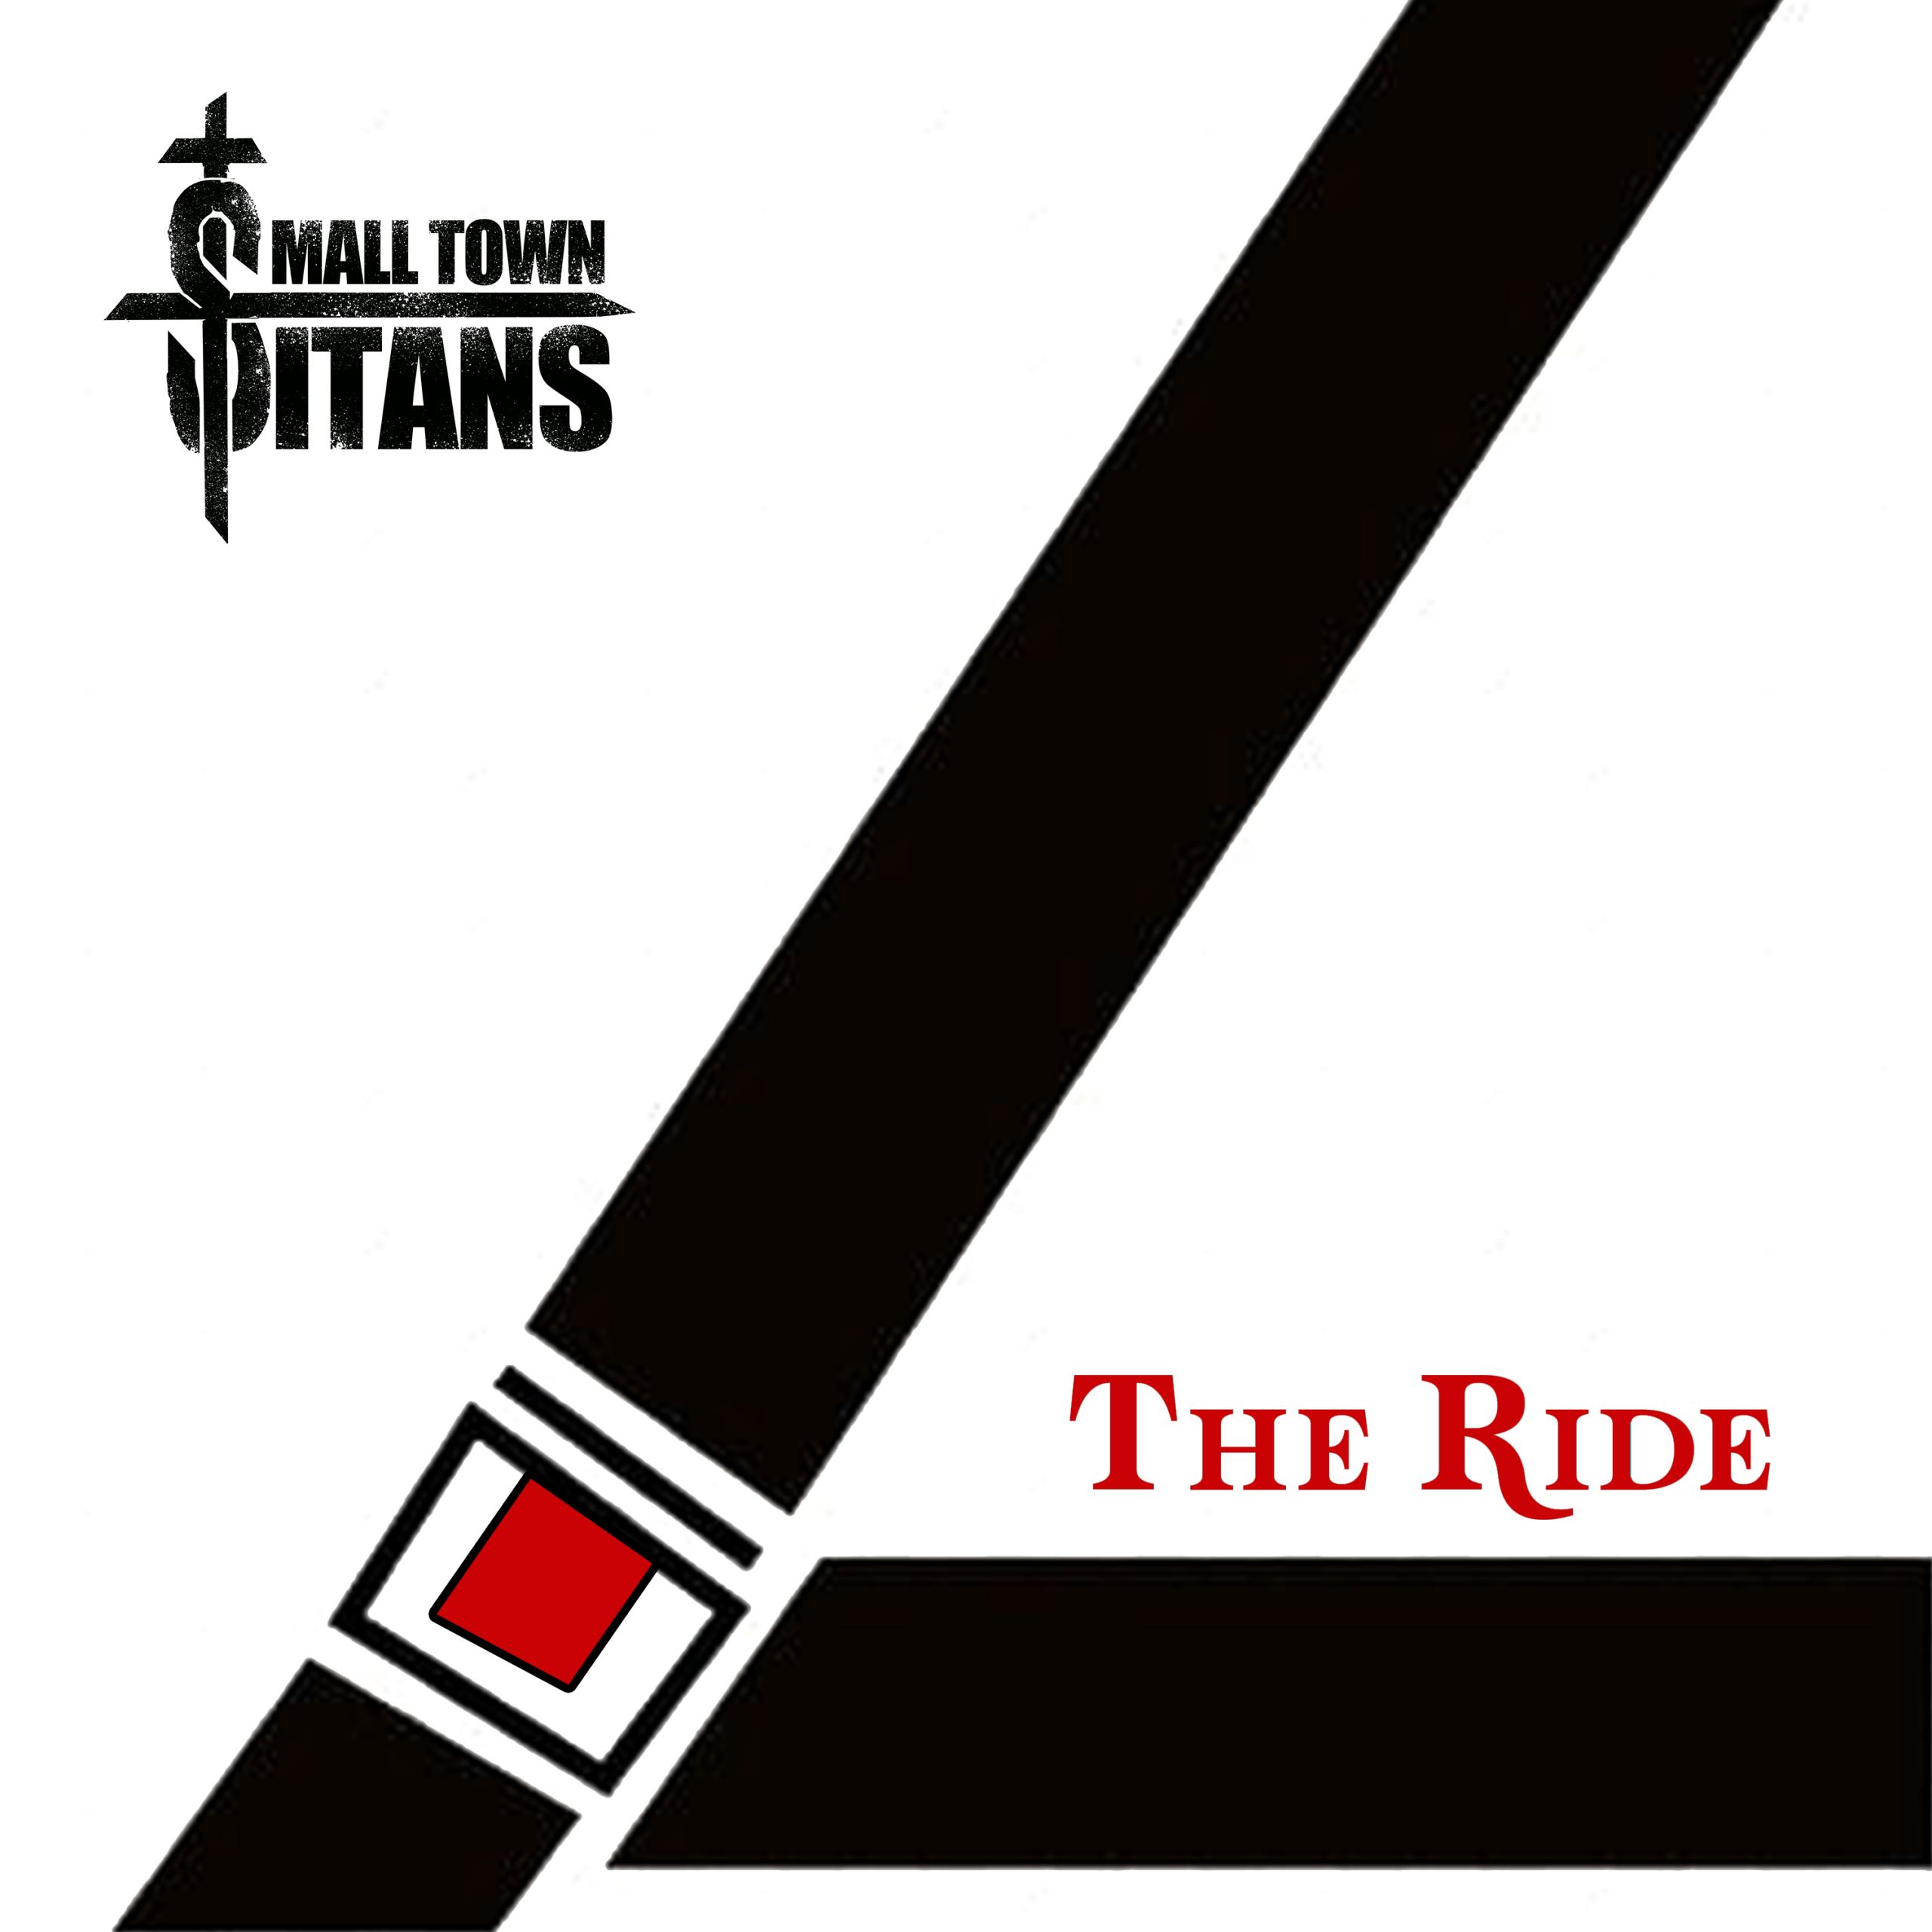 Small Town Titans, The Ride Releases Nov 13th